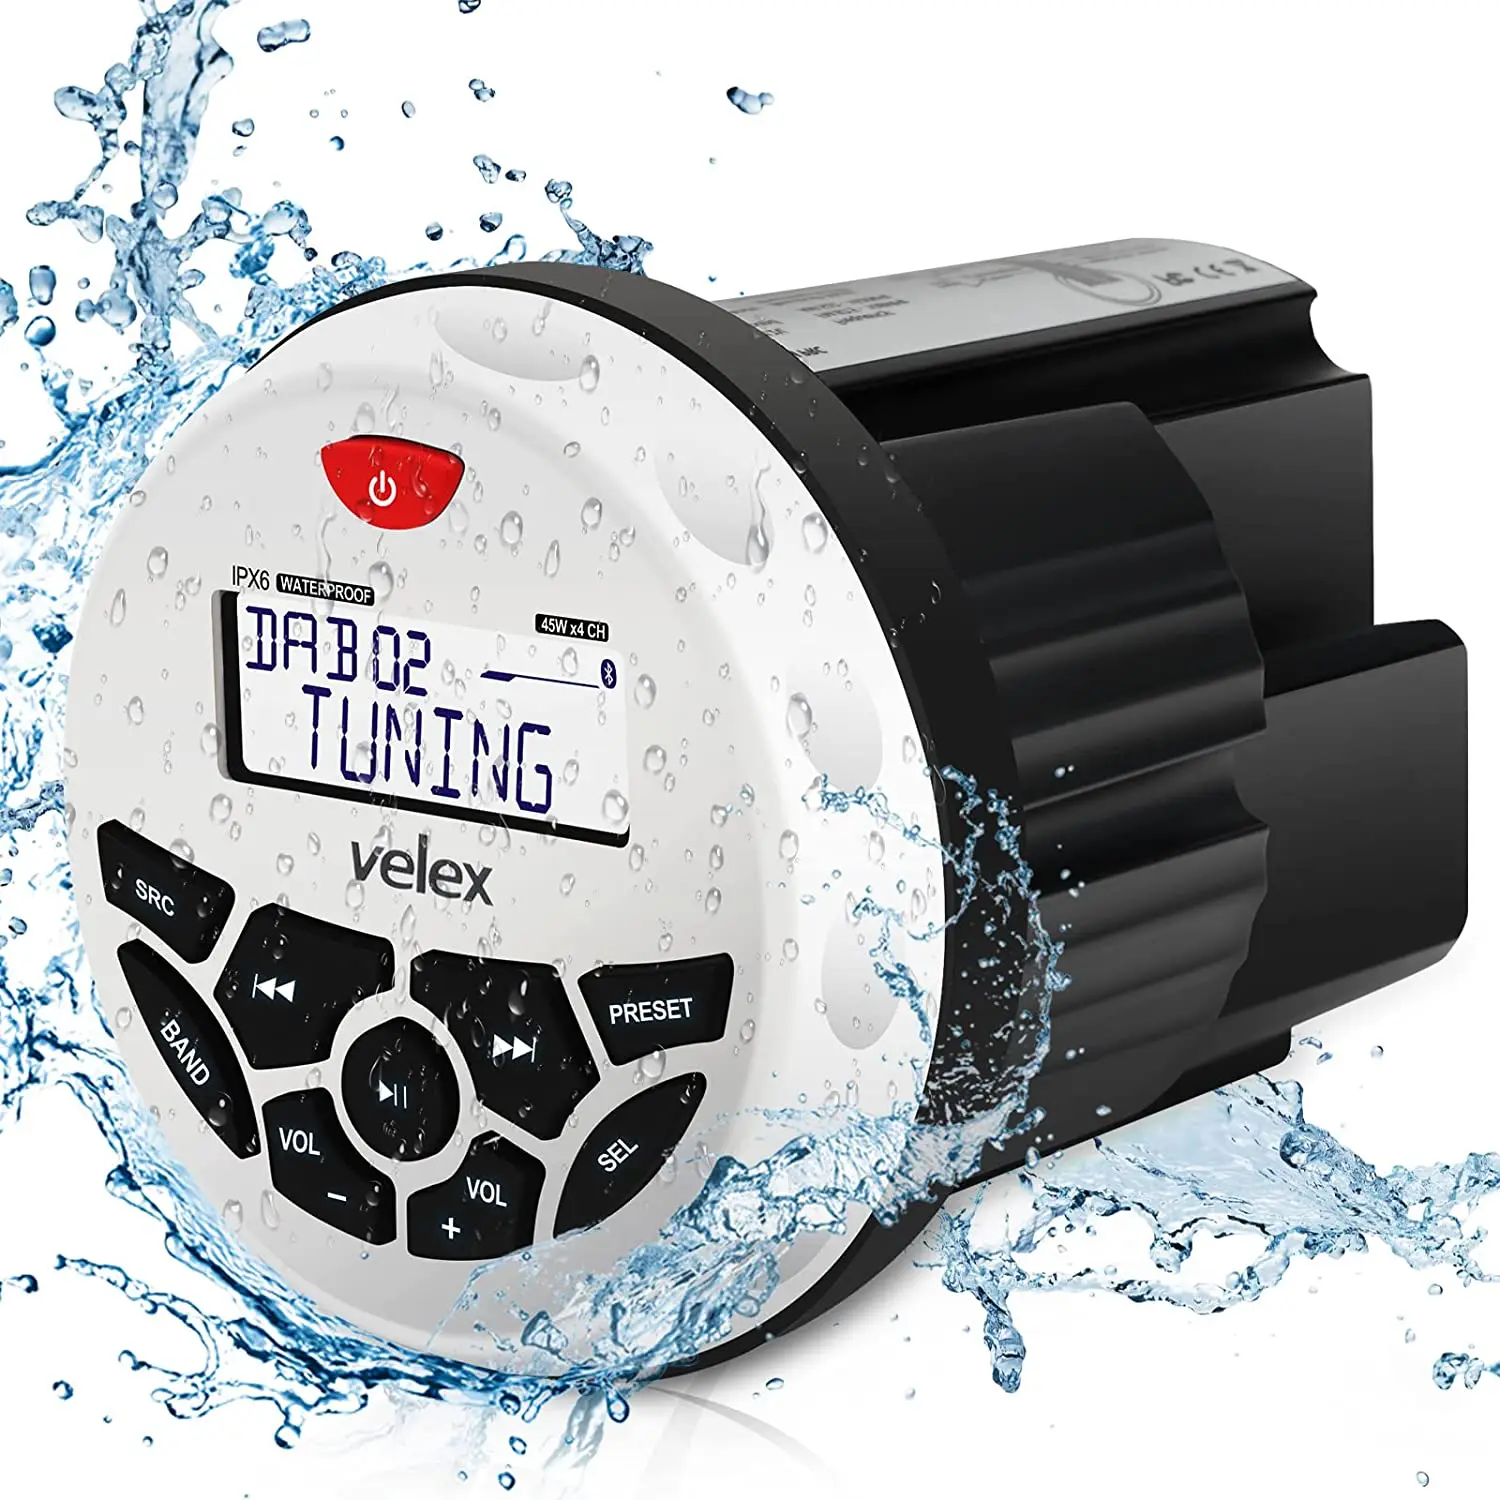 waterproof dab radio